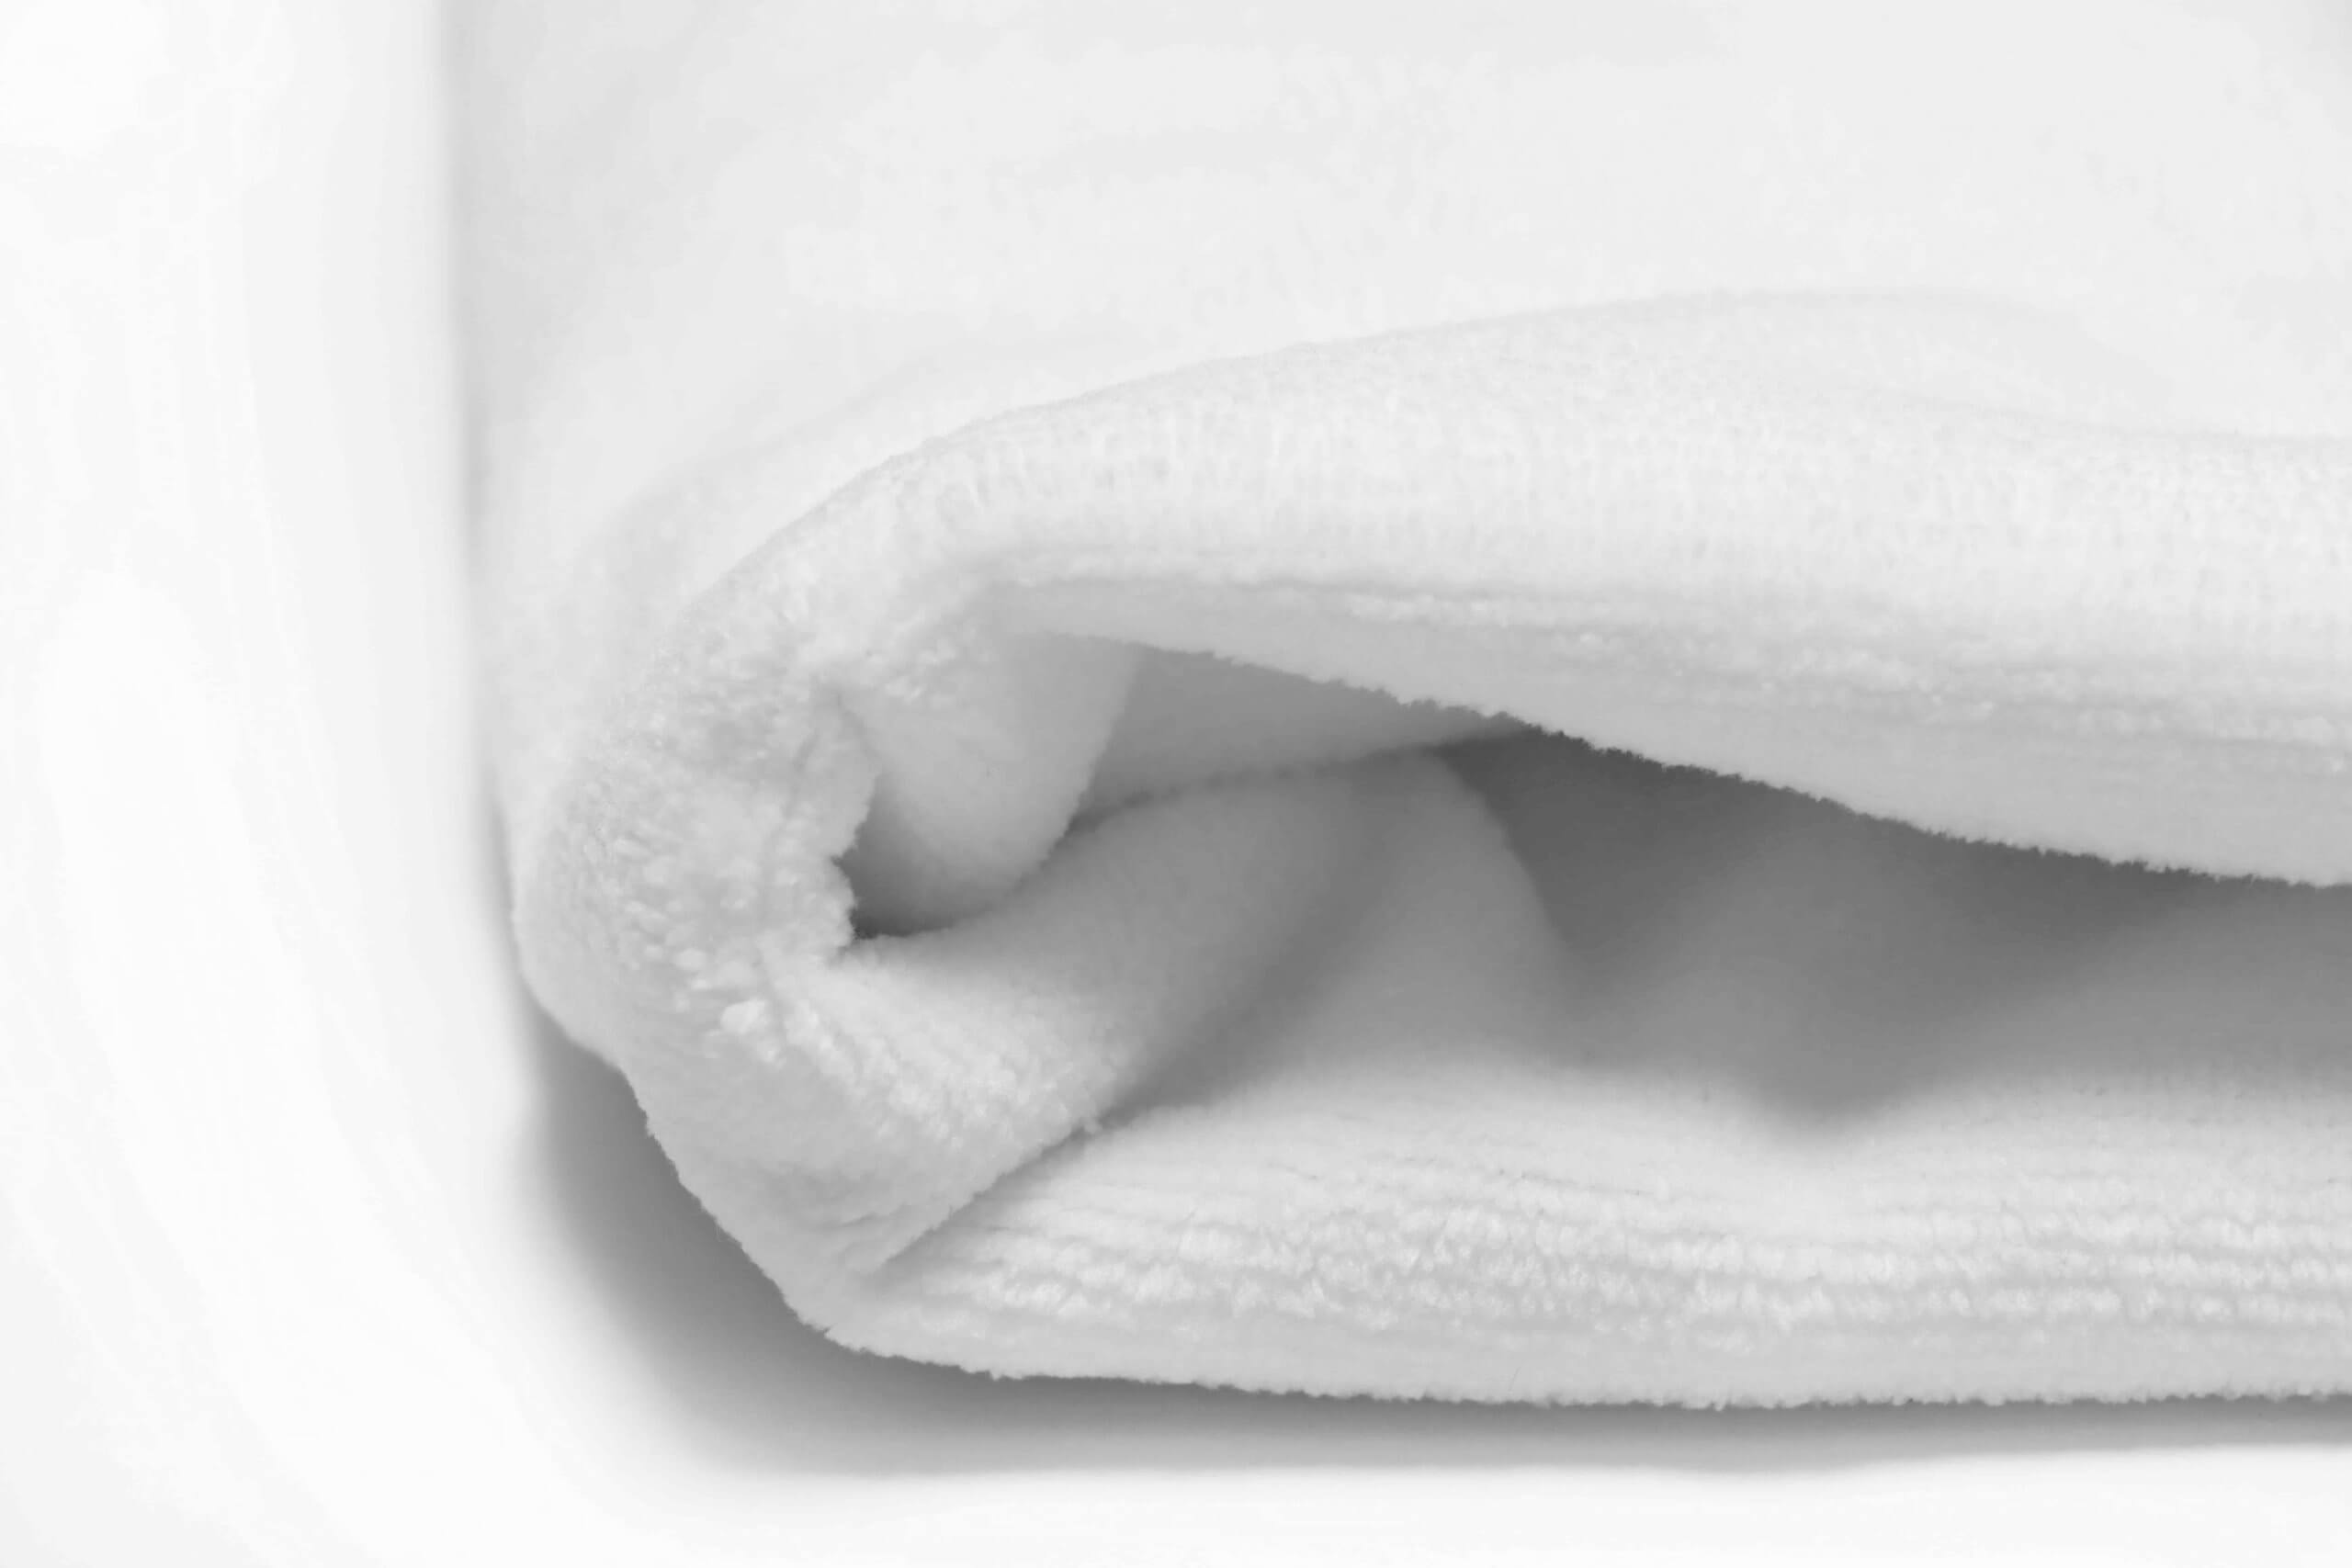 Custom Louis Vuitton beach towel house slippers👣👣 which pair is